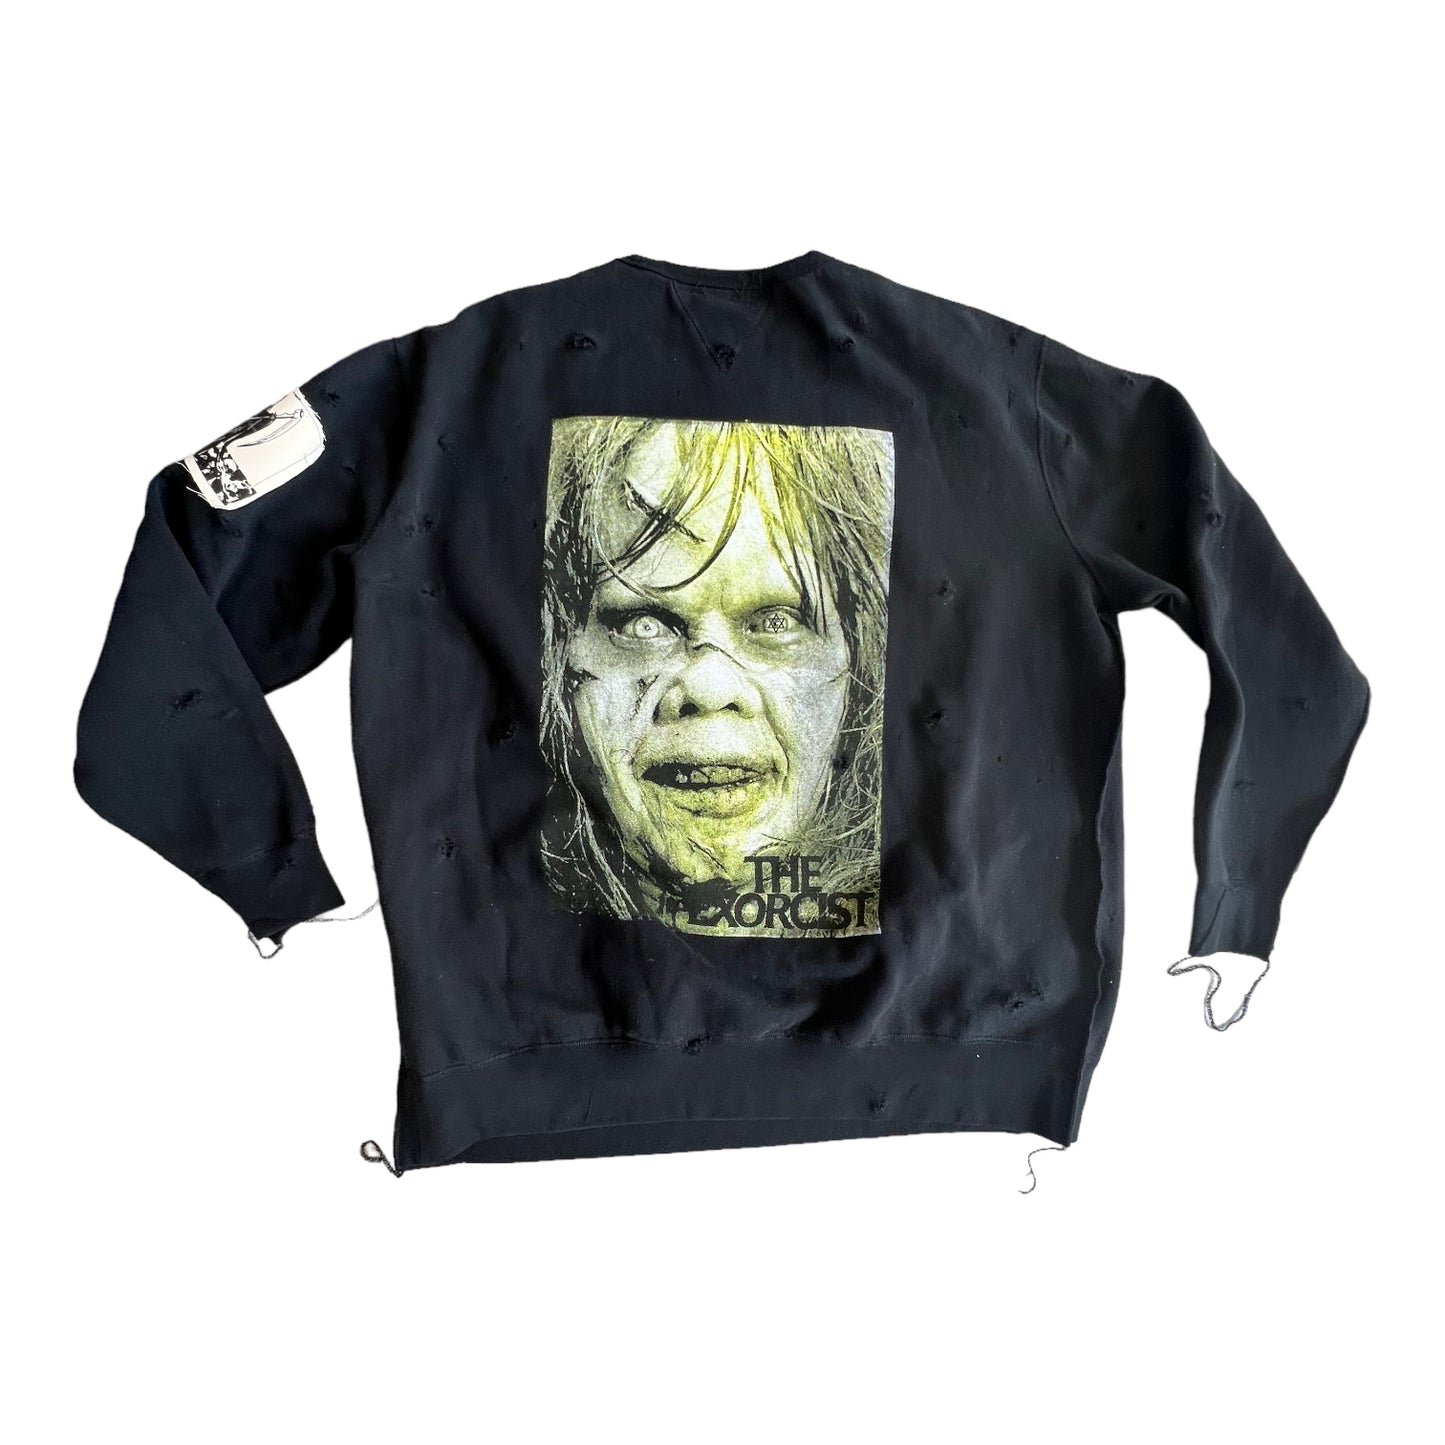 Exorcist 1/1 crewneck sweater